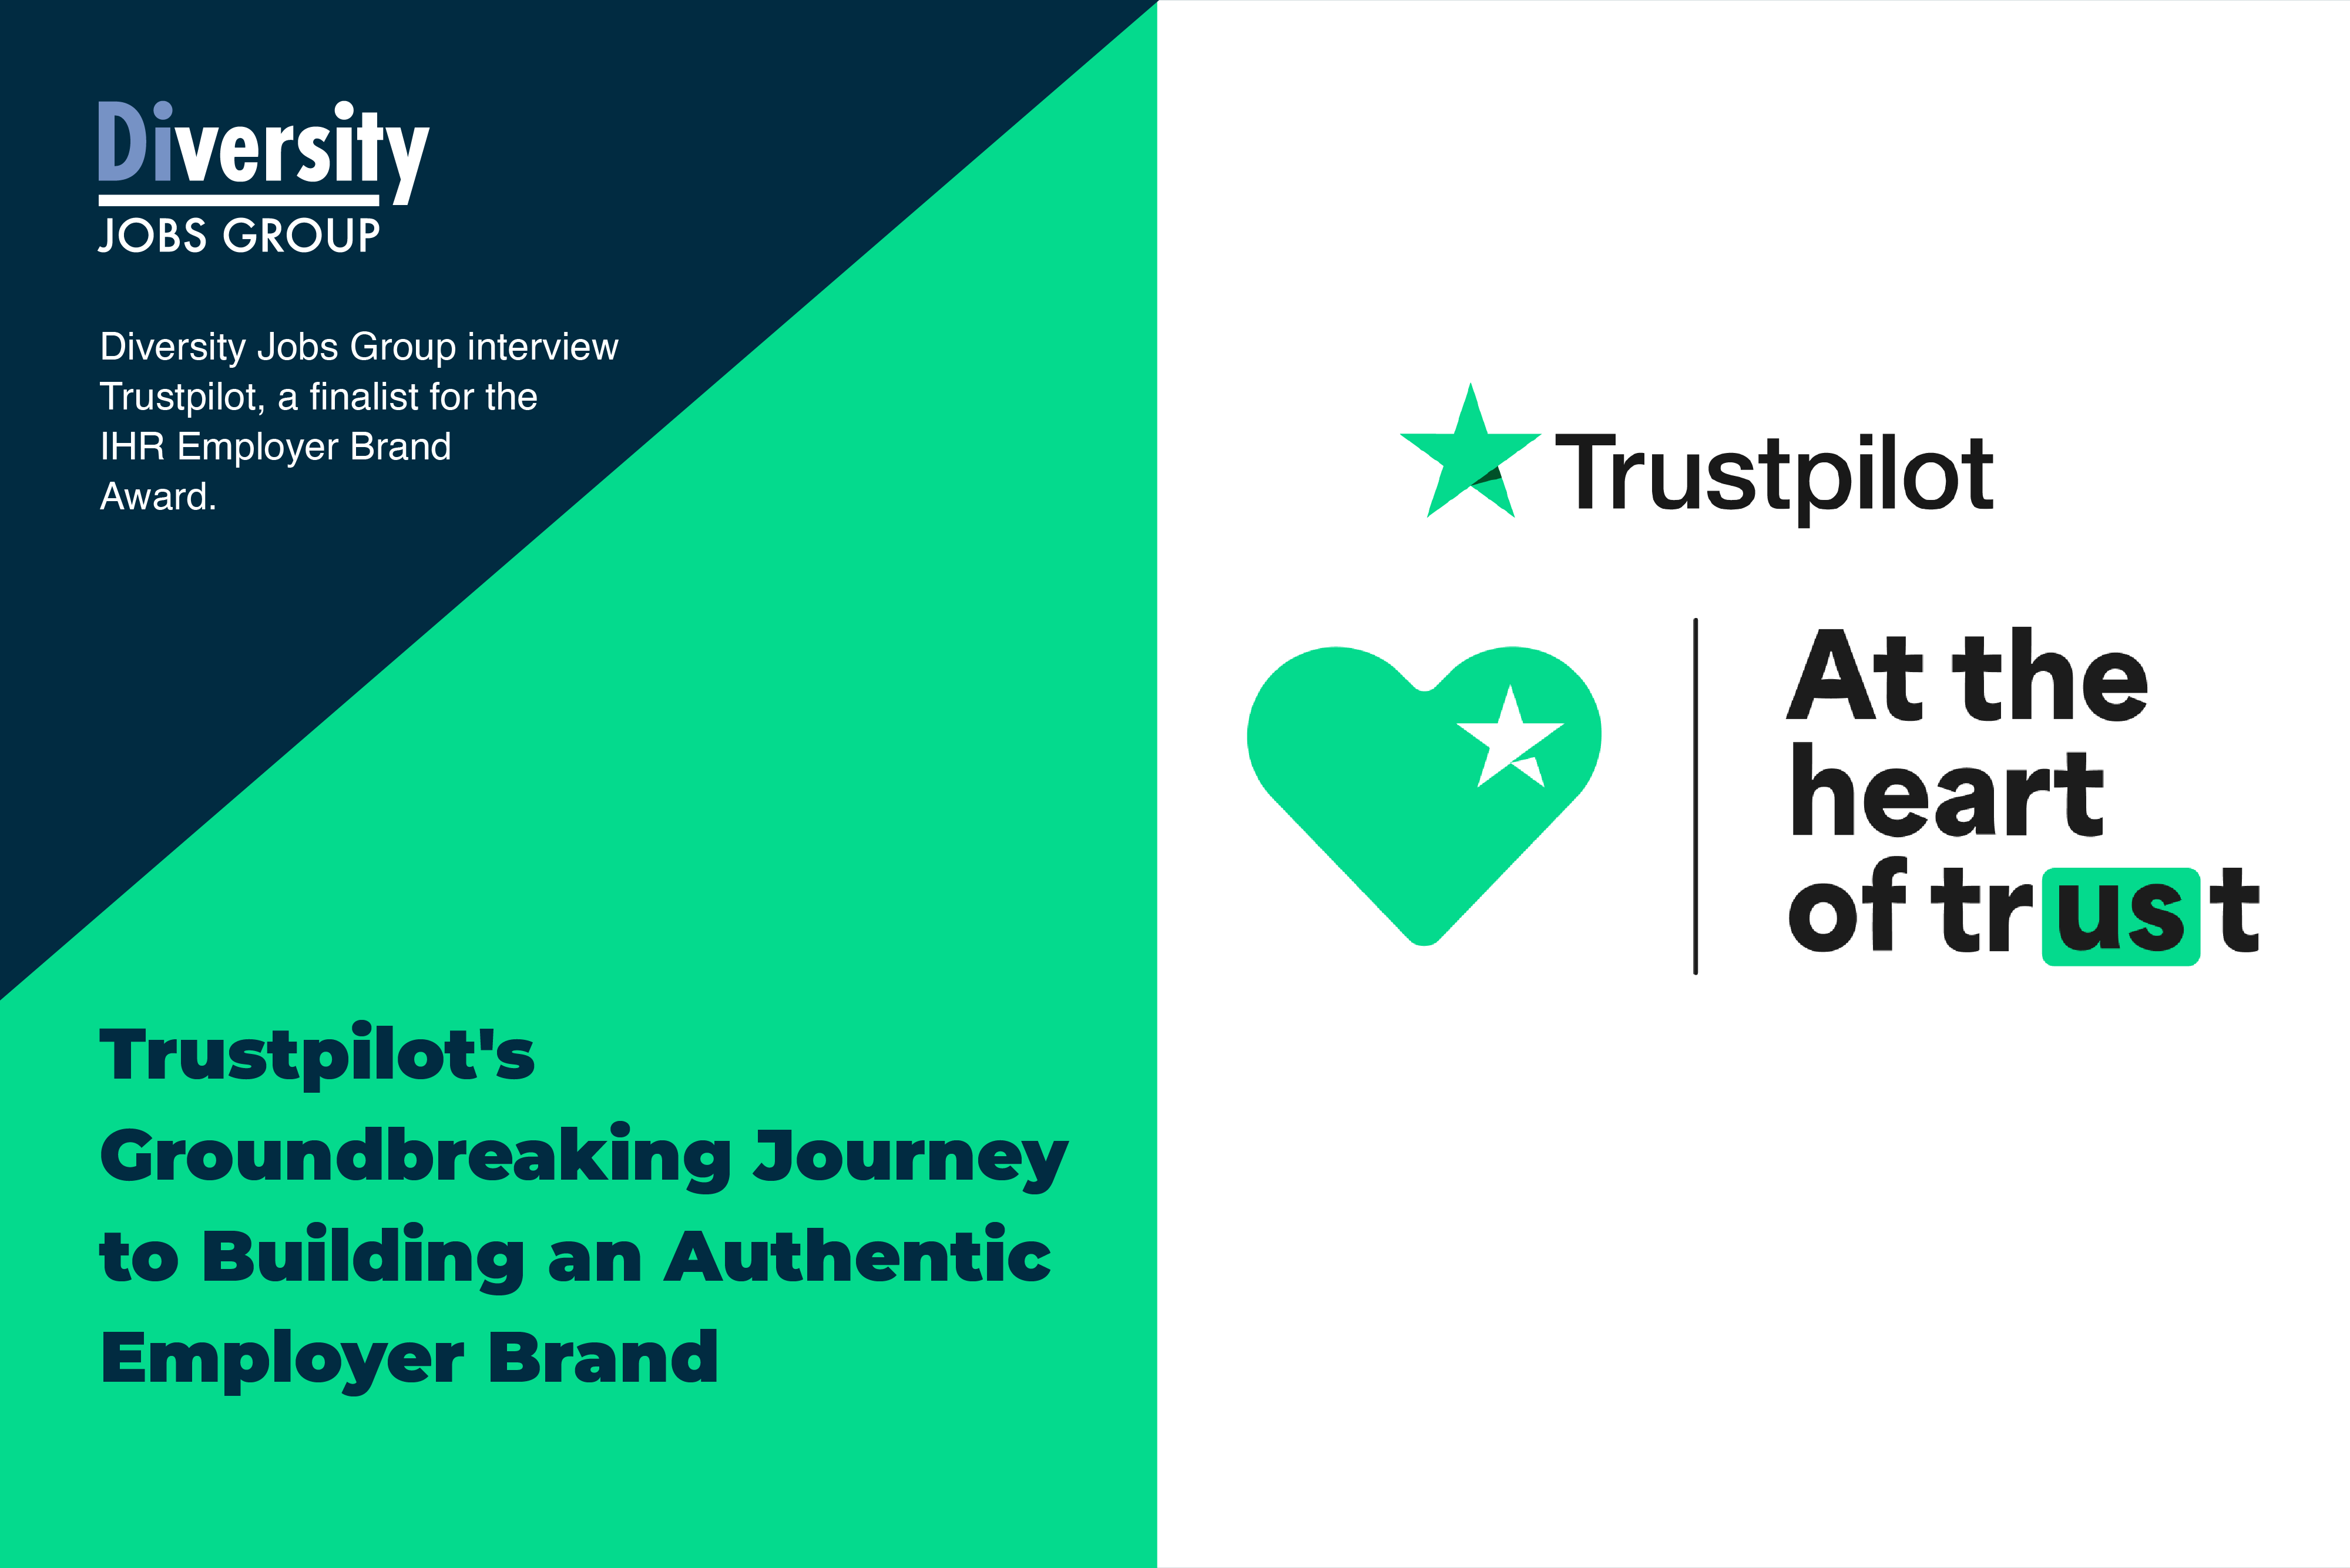 Trustpilot’s Groundbreaking Journey to Building an Authentic Employer Brand